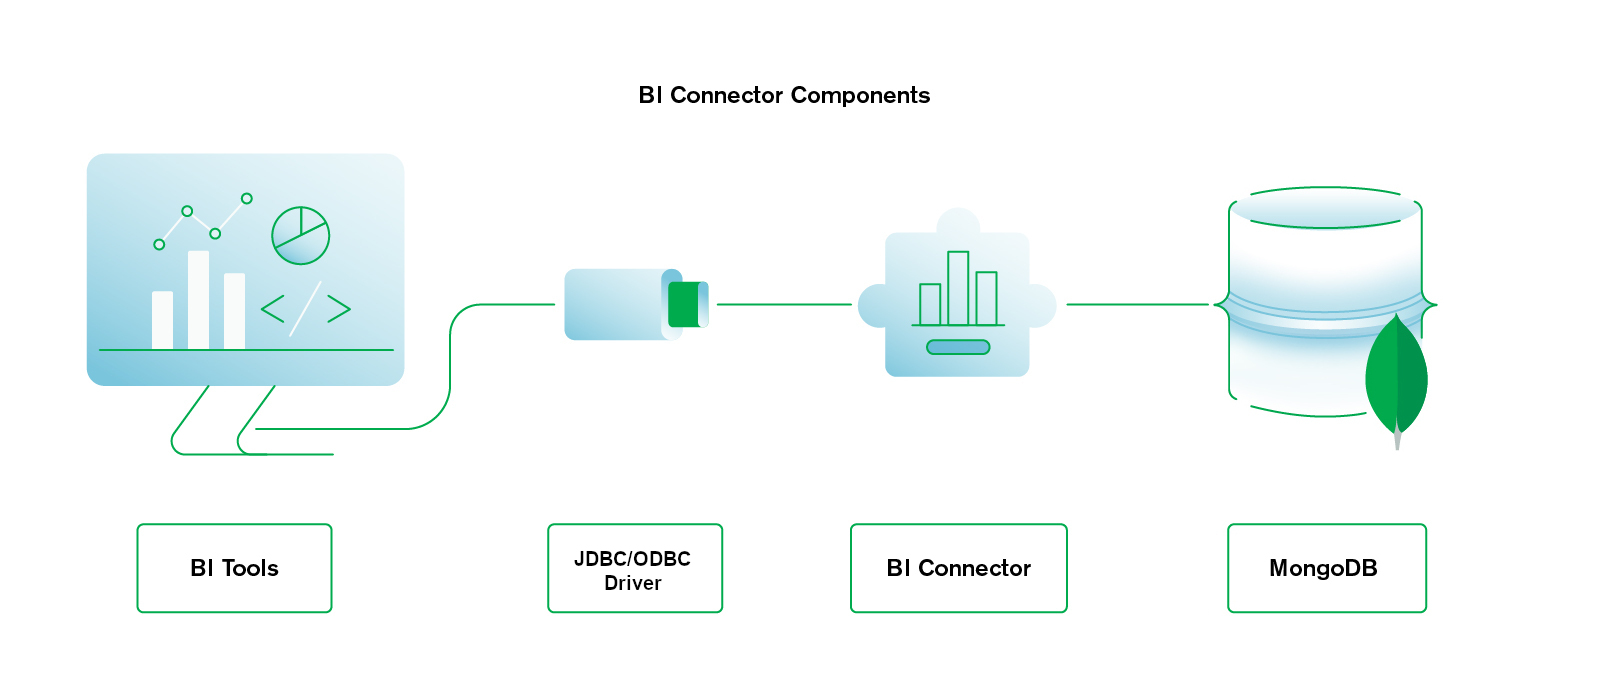 DSN와 BI Connector의 연결을 보여주는 다이어그램.